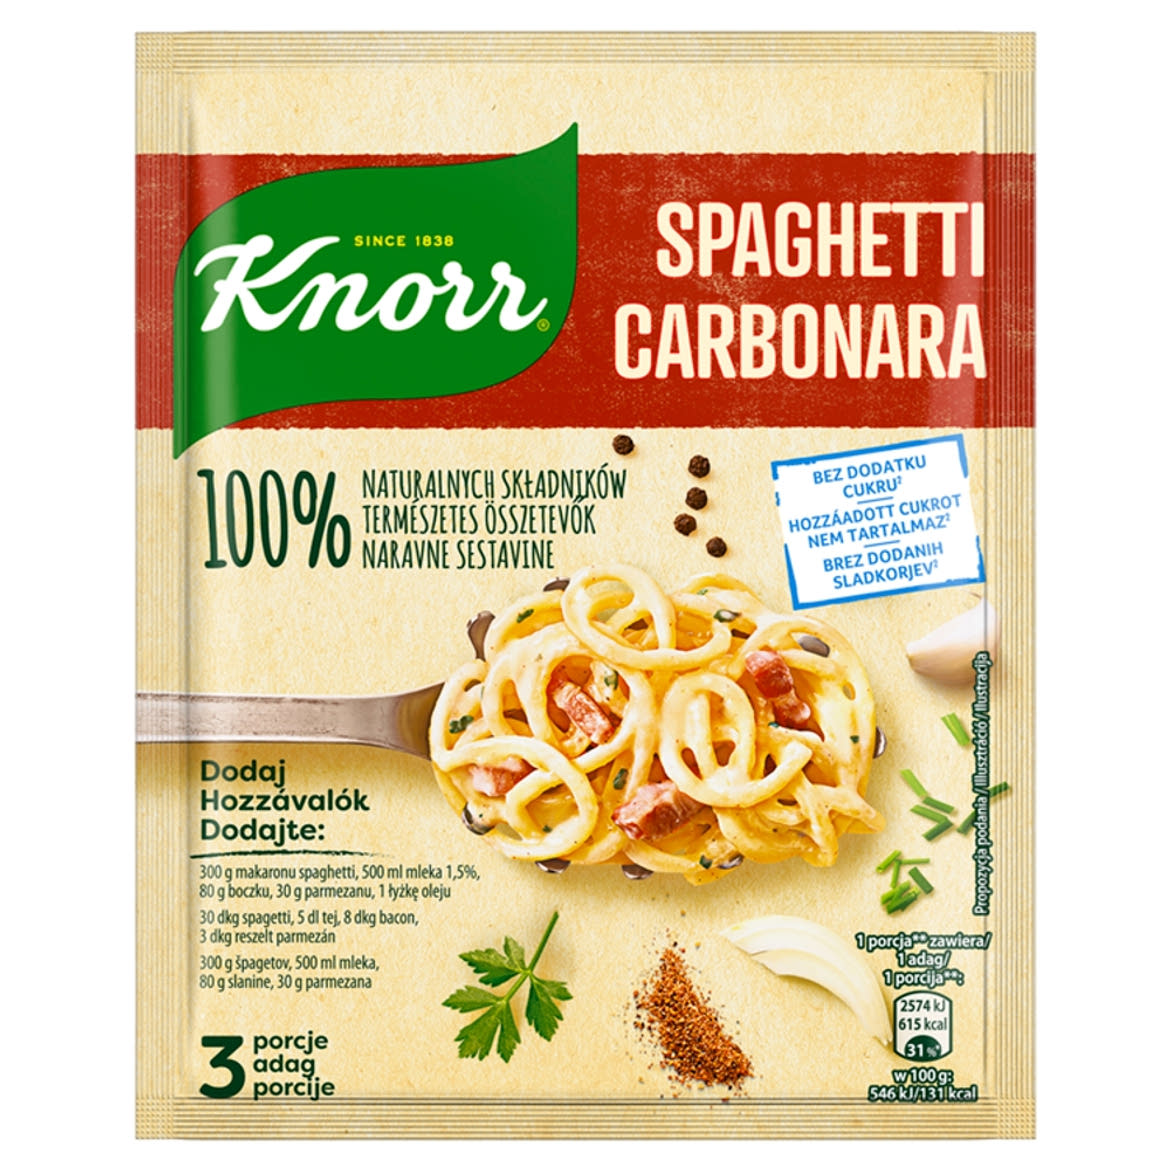 Knorr carbonara spagetti alap